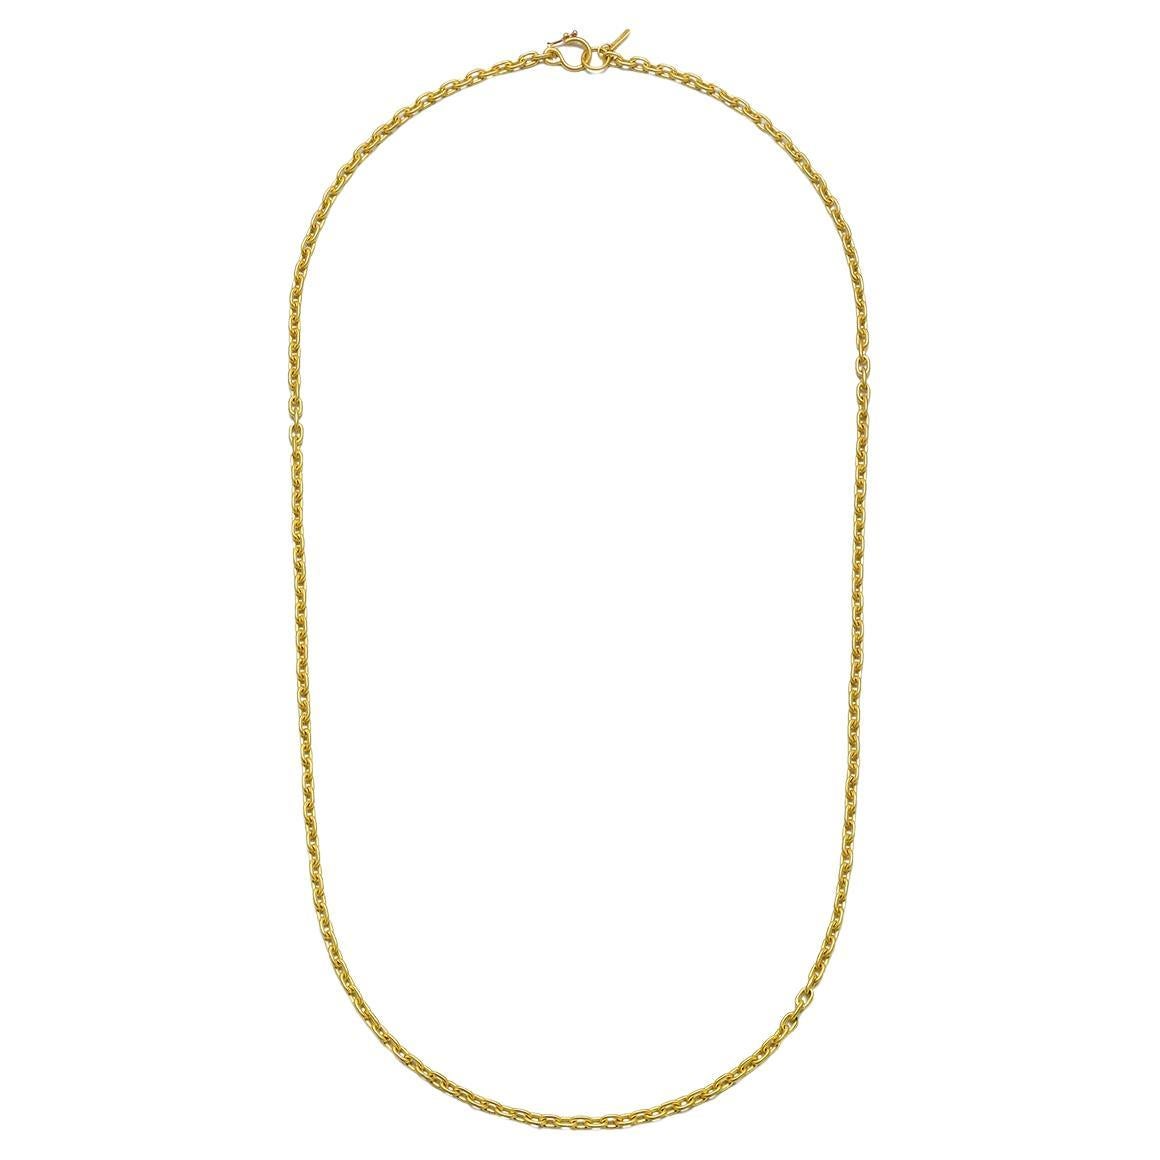 Faye Kim 18 Karat Gold Heavy Oval Link Chain, Mini Length 24" For Sale